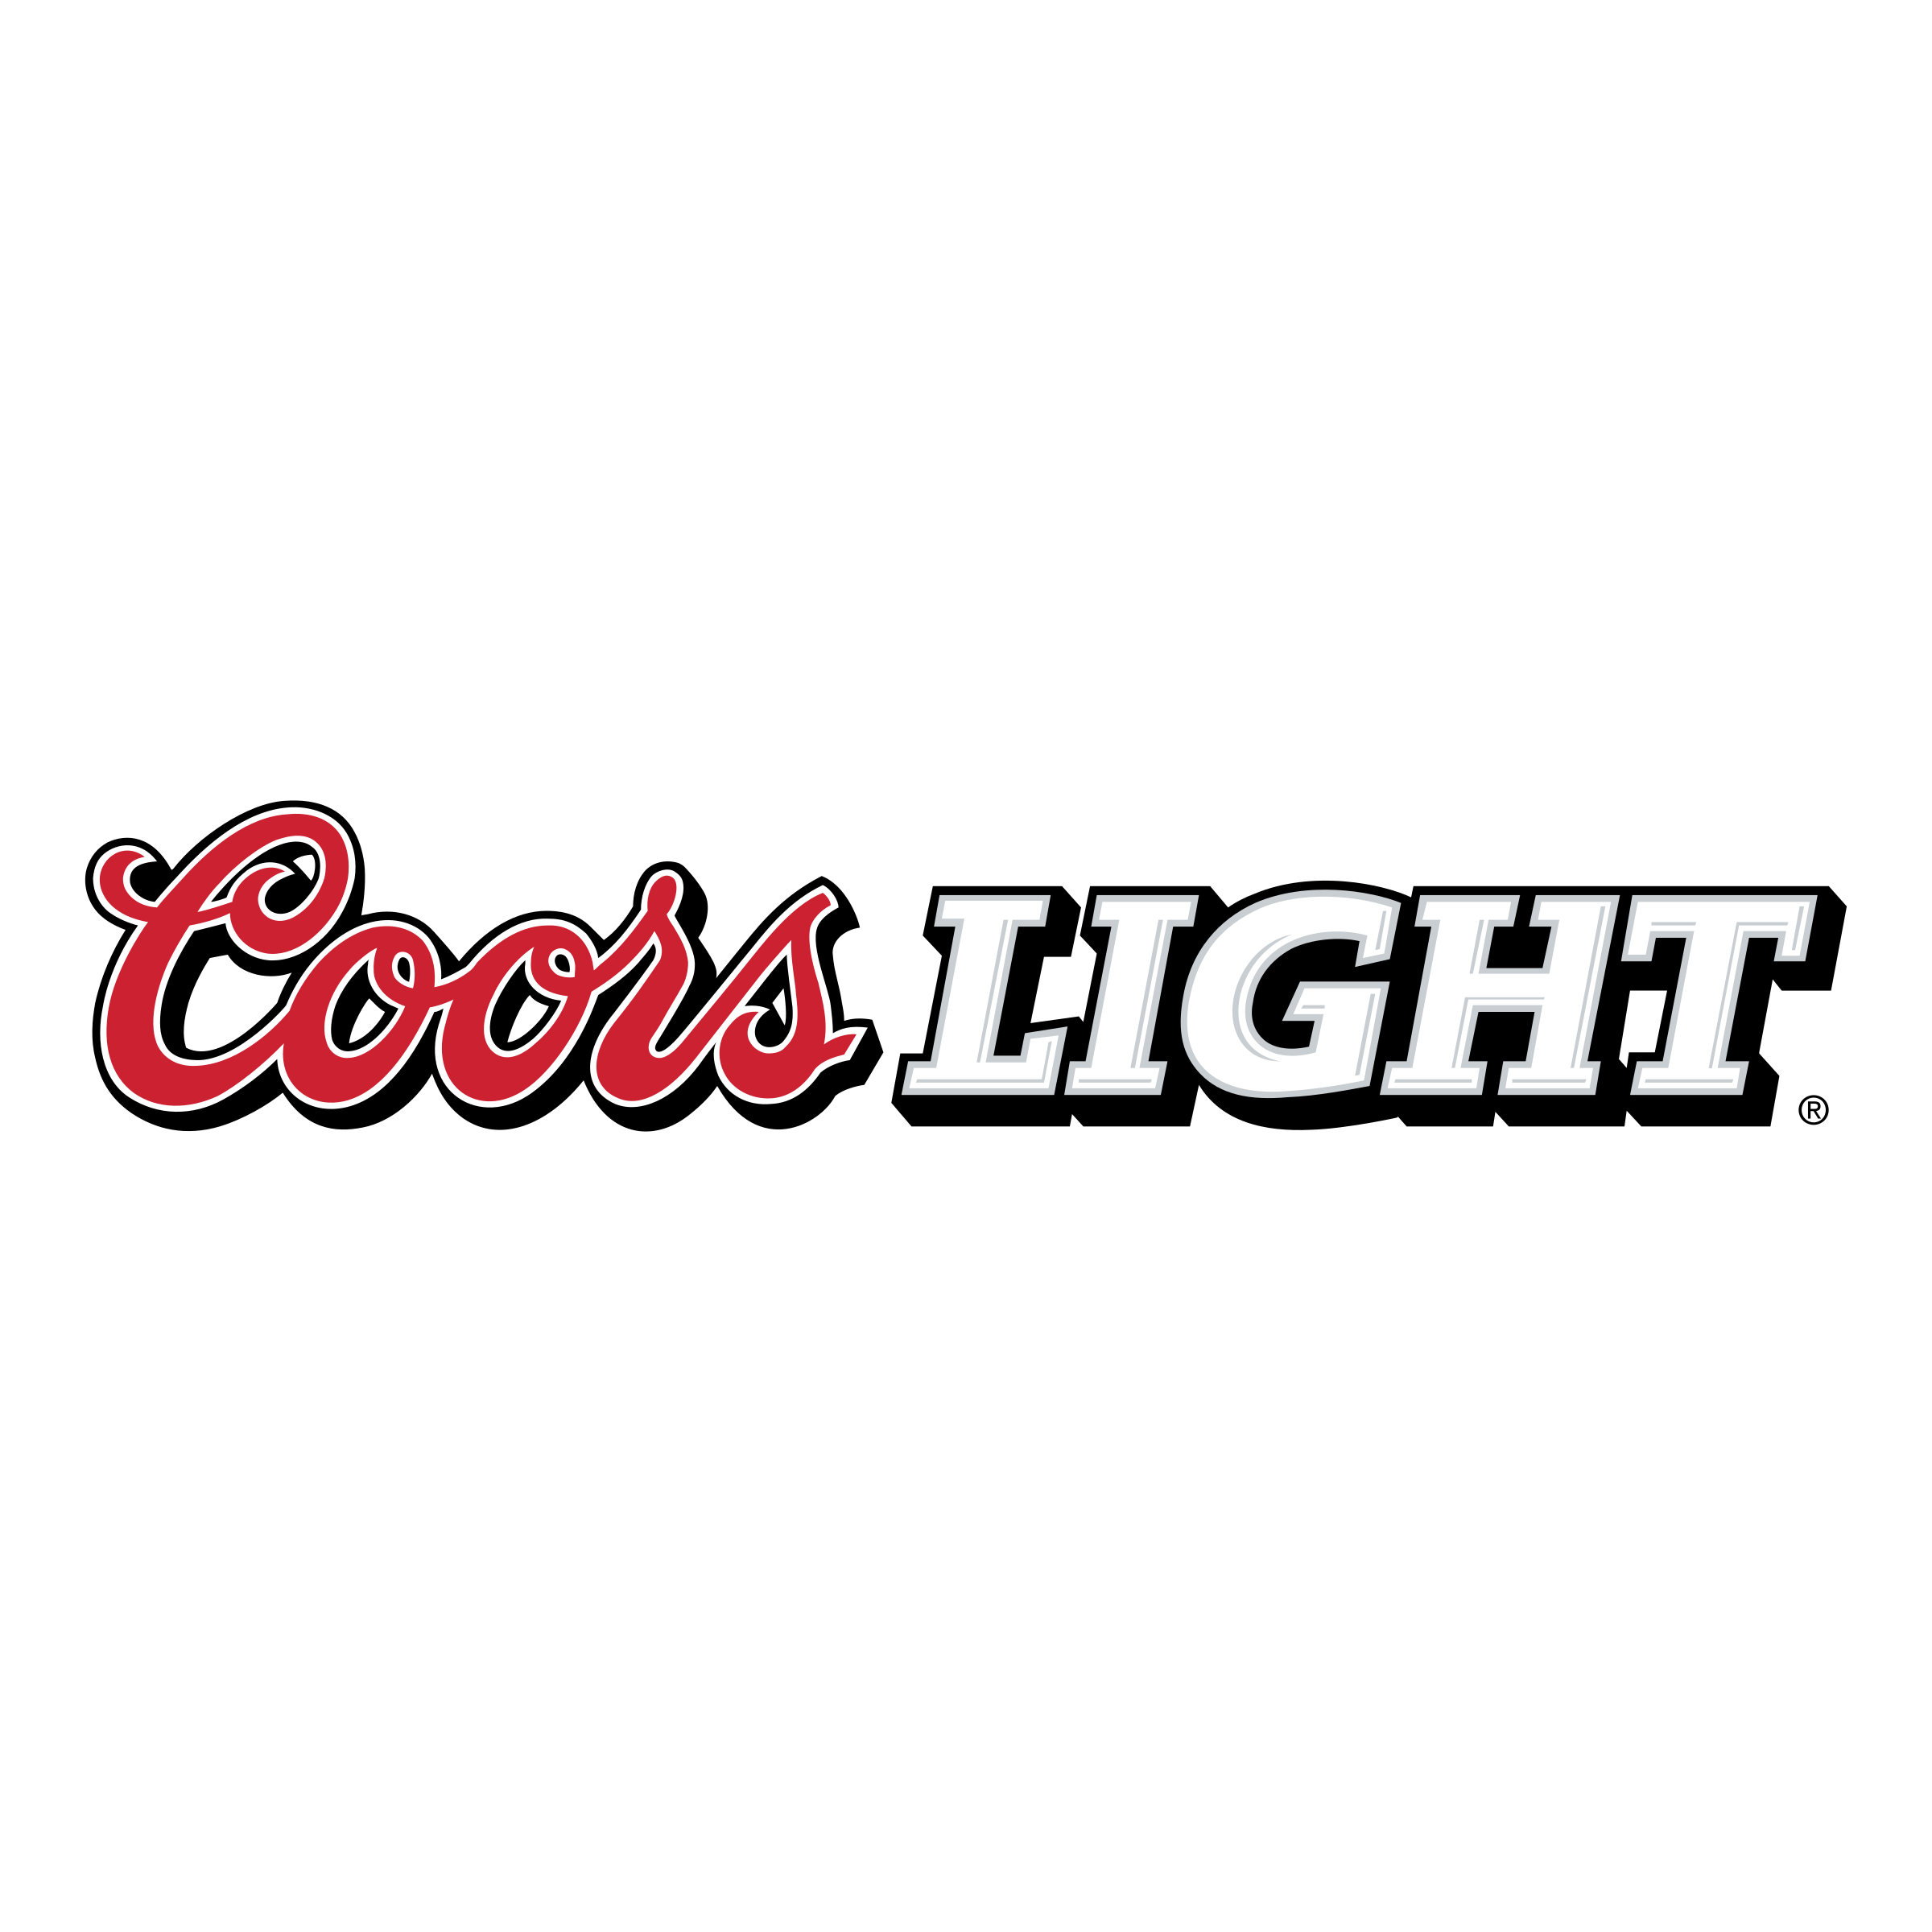 Cors Light Logo - Coors Light Logo PNG Transparent & SVG Vector - Freebie Supply